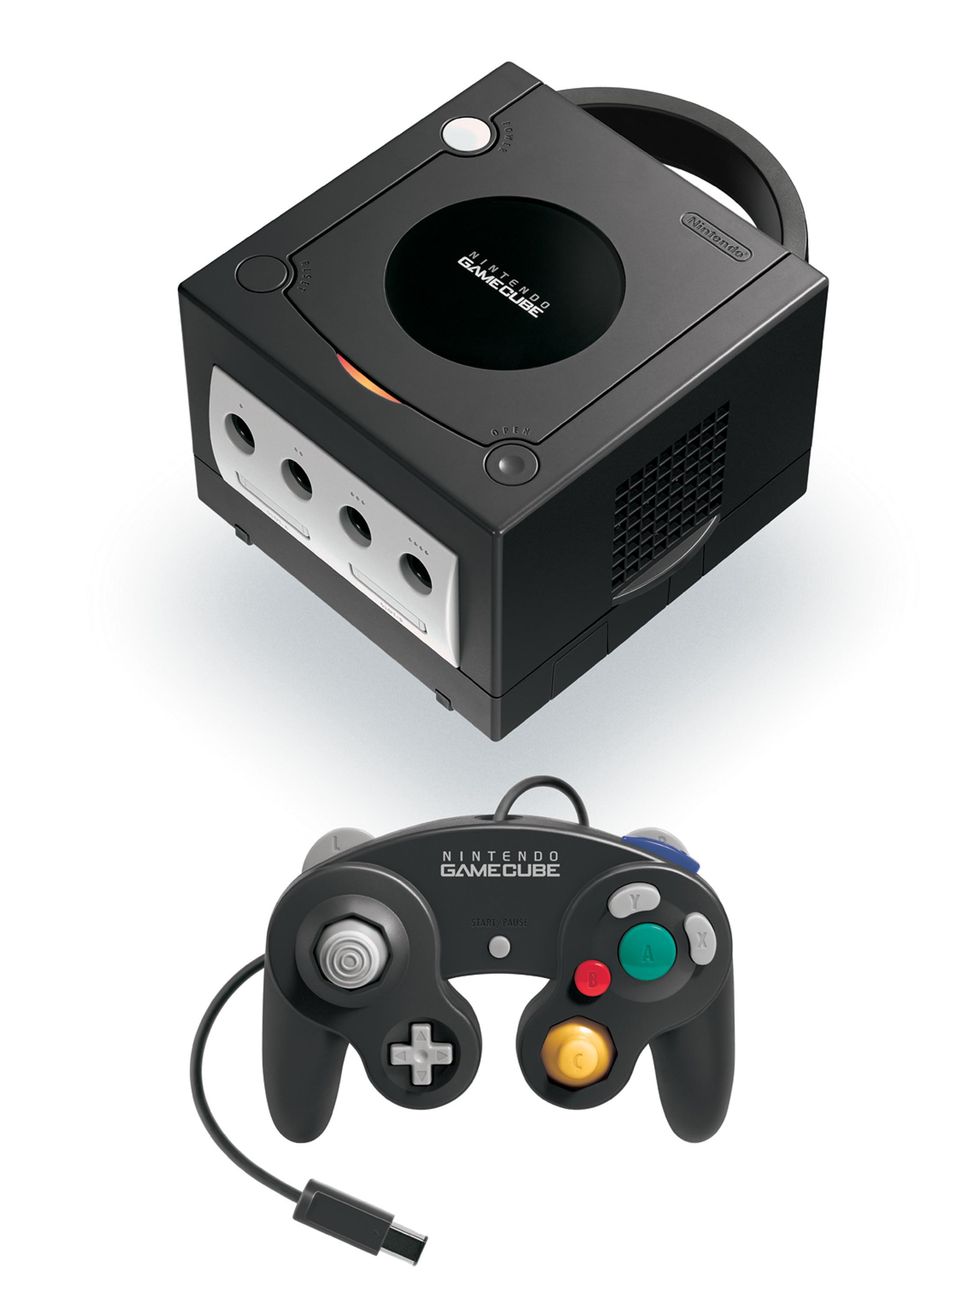 Nintendo's video game console Gamecube